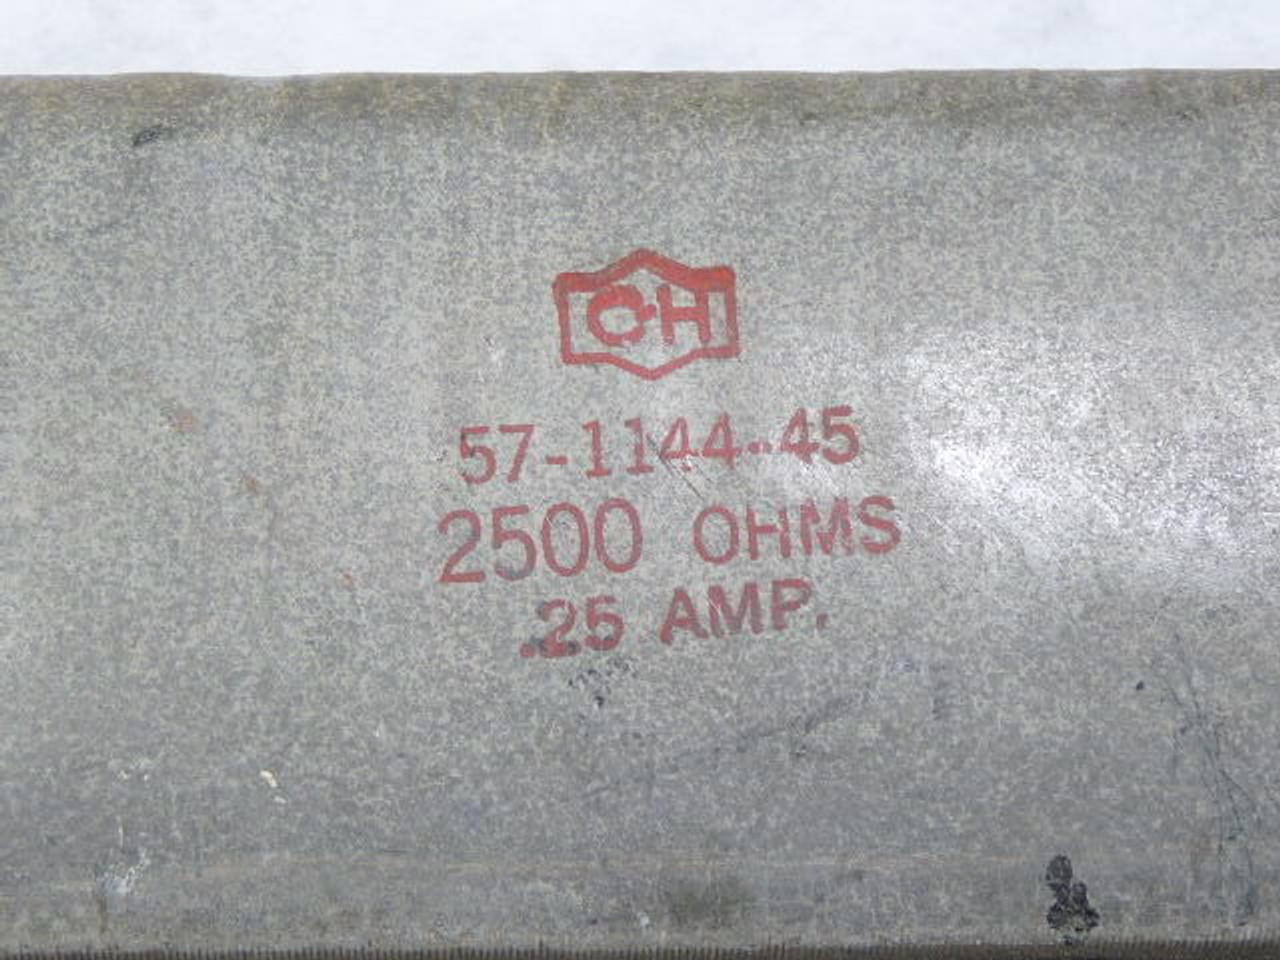 Cutler Hammer 57-1144-45 Flat Body Ceramic Resistor .25A 2500 Ohms USED